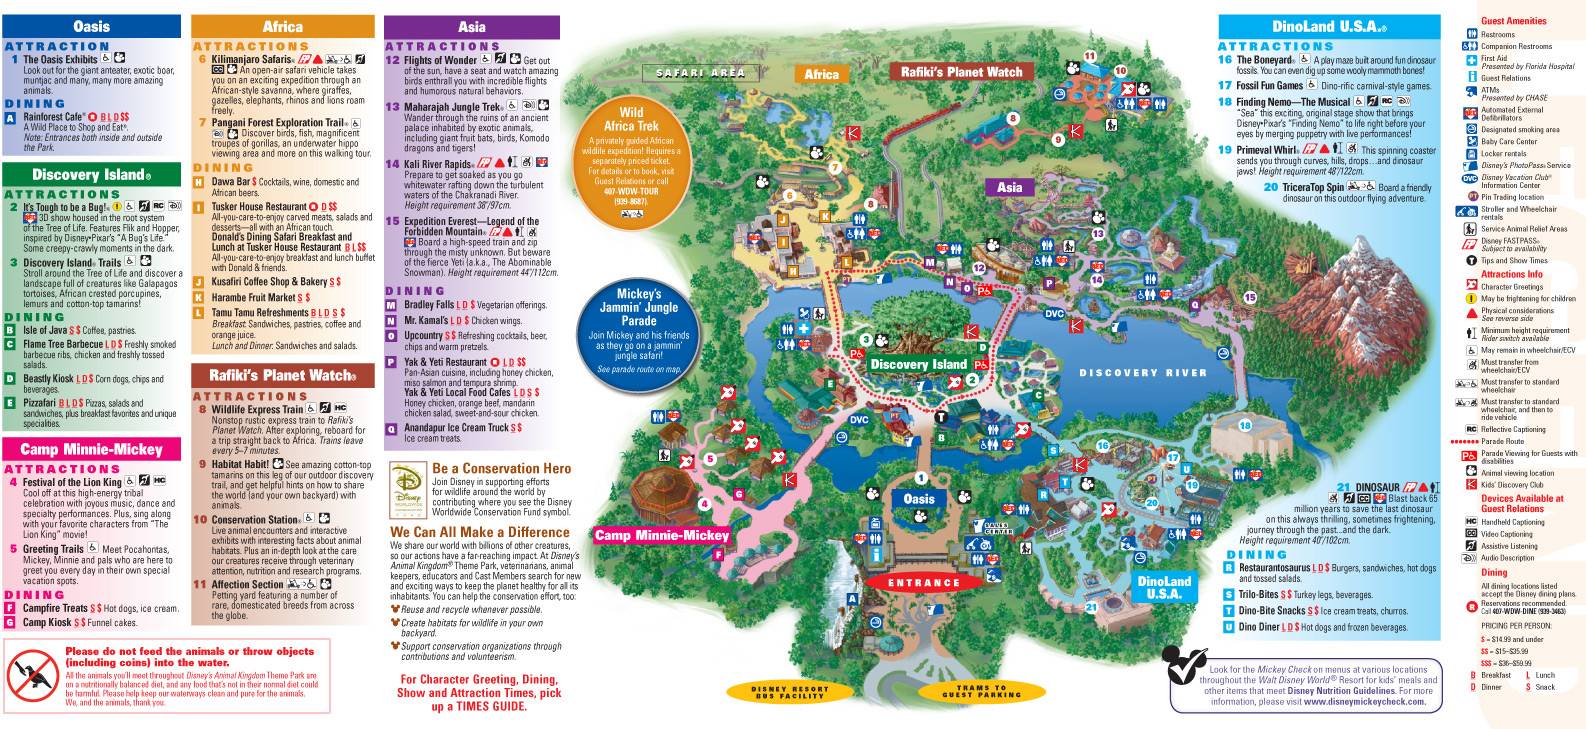 Disney's Animal Kingdom guidemap January 2013